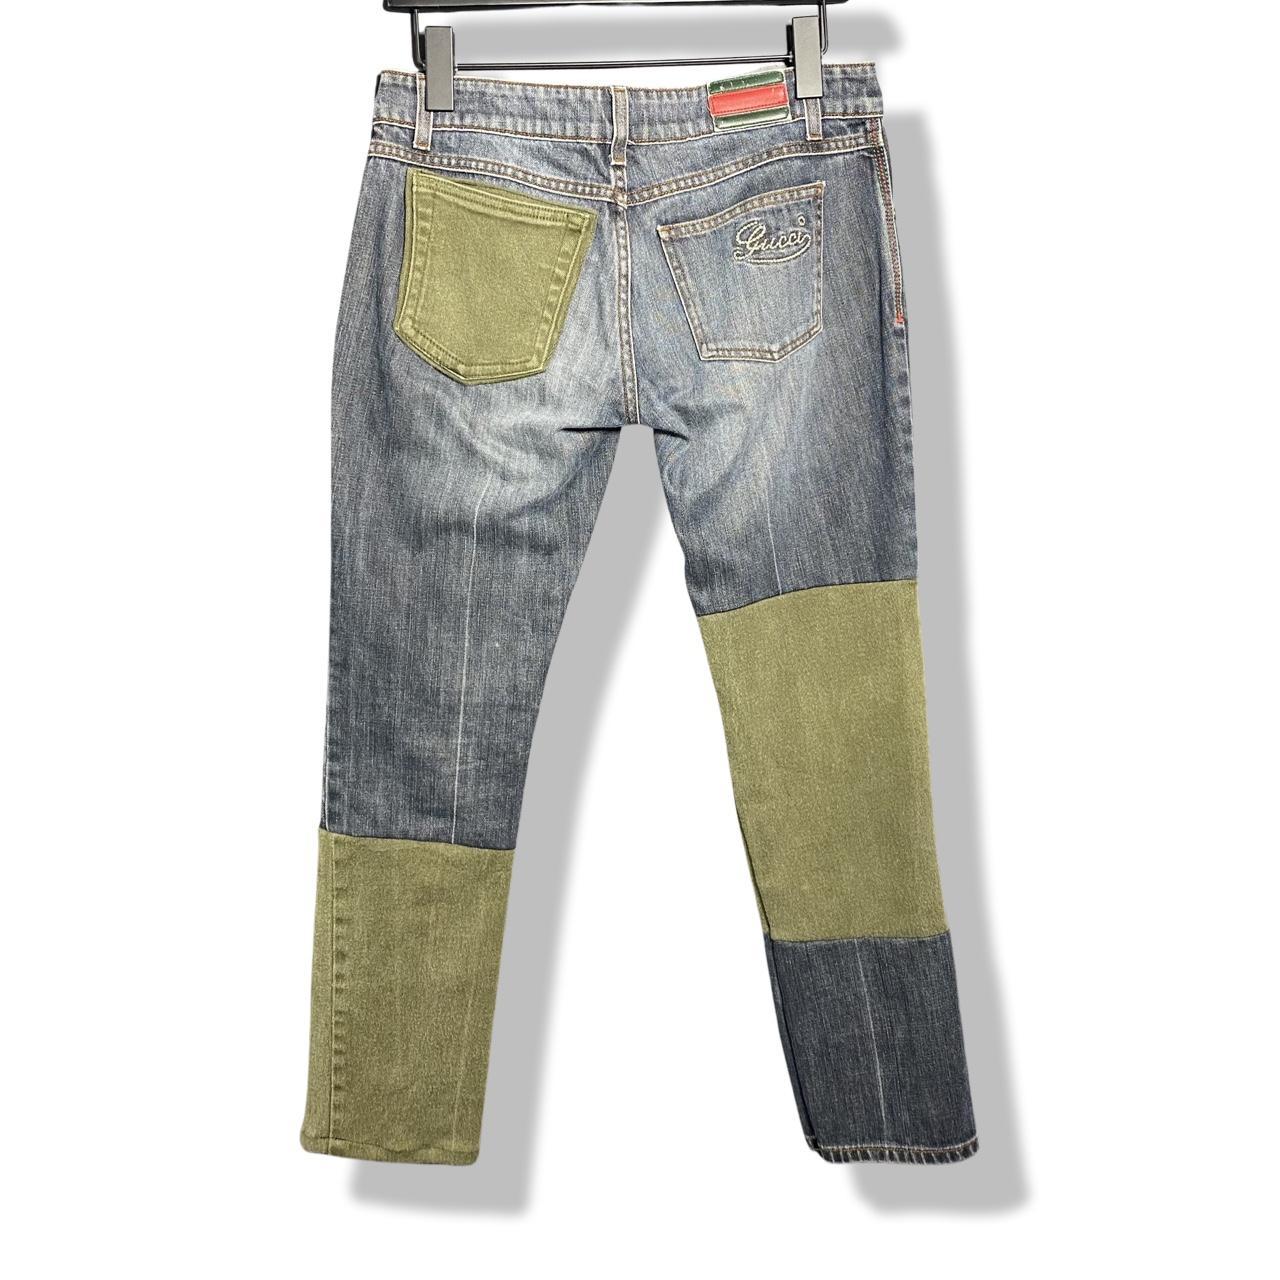 Latham Street Patchwork Jeans. ReMade from vintage... - Depop